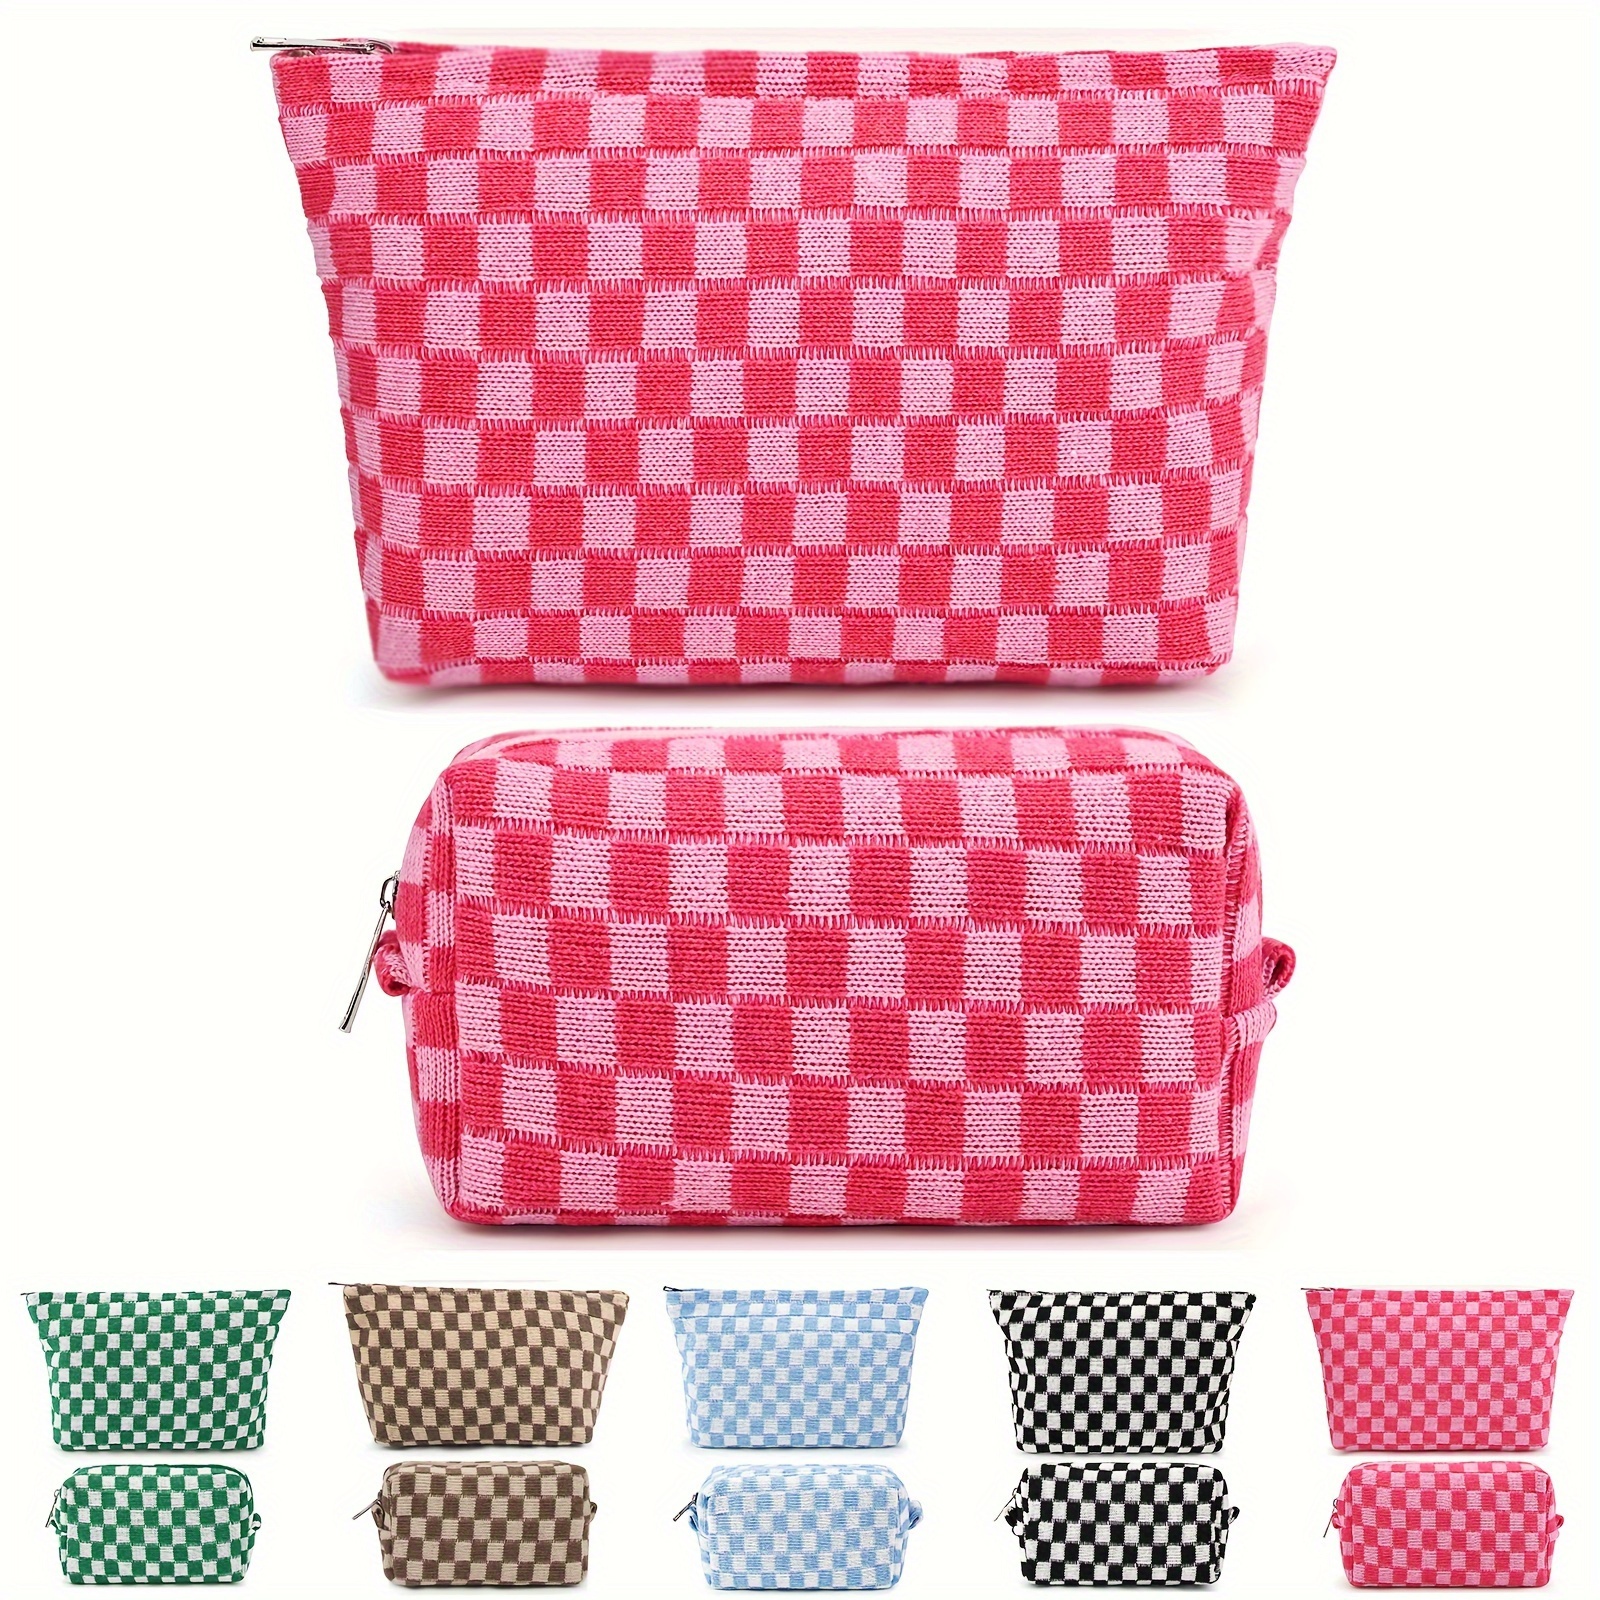 

2pcs/set, Makeup Bag Checker Pattern Cosmetic Bag For Women, Large Capacity Makeup Bags Pencil Case Makeup Brushes Holder Storage Bag Travel Toiletry Bag Organizer